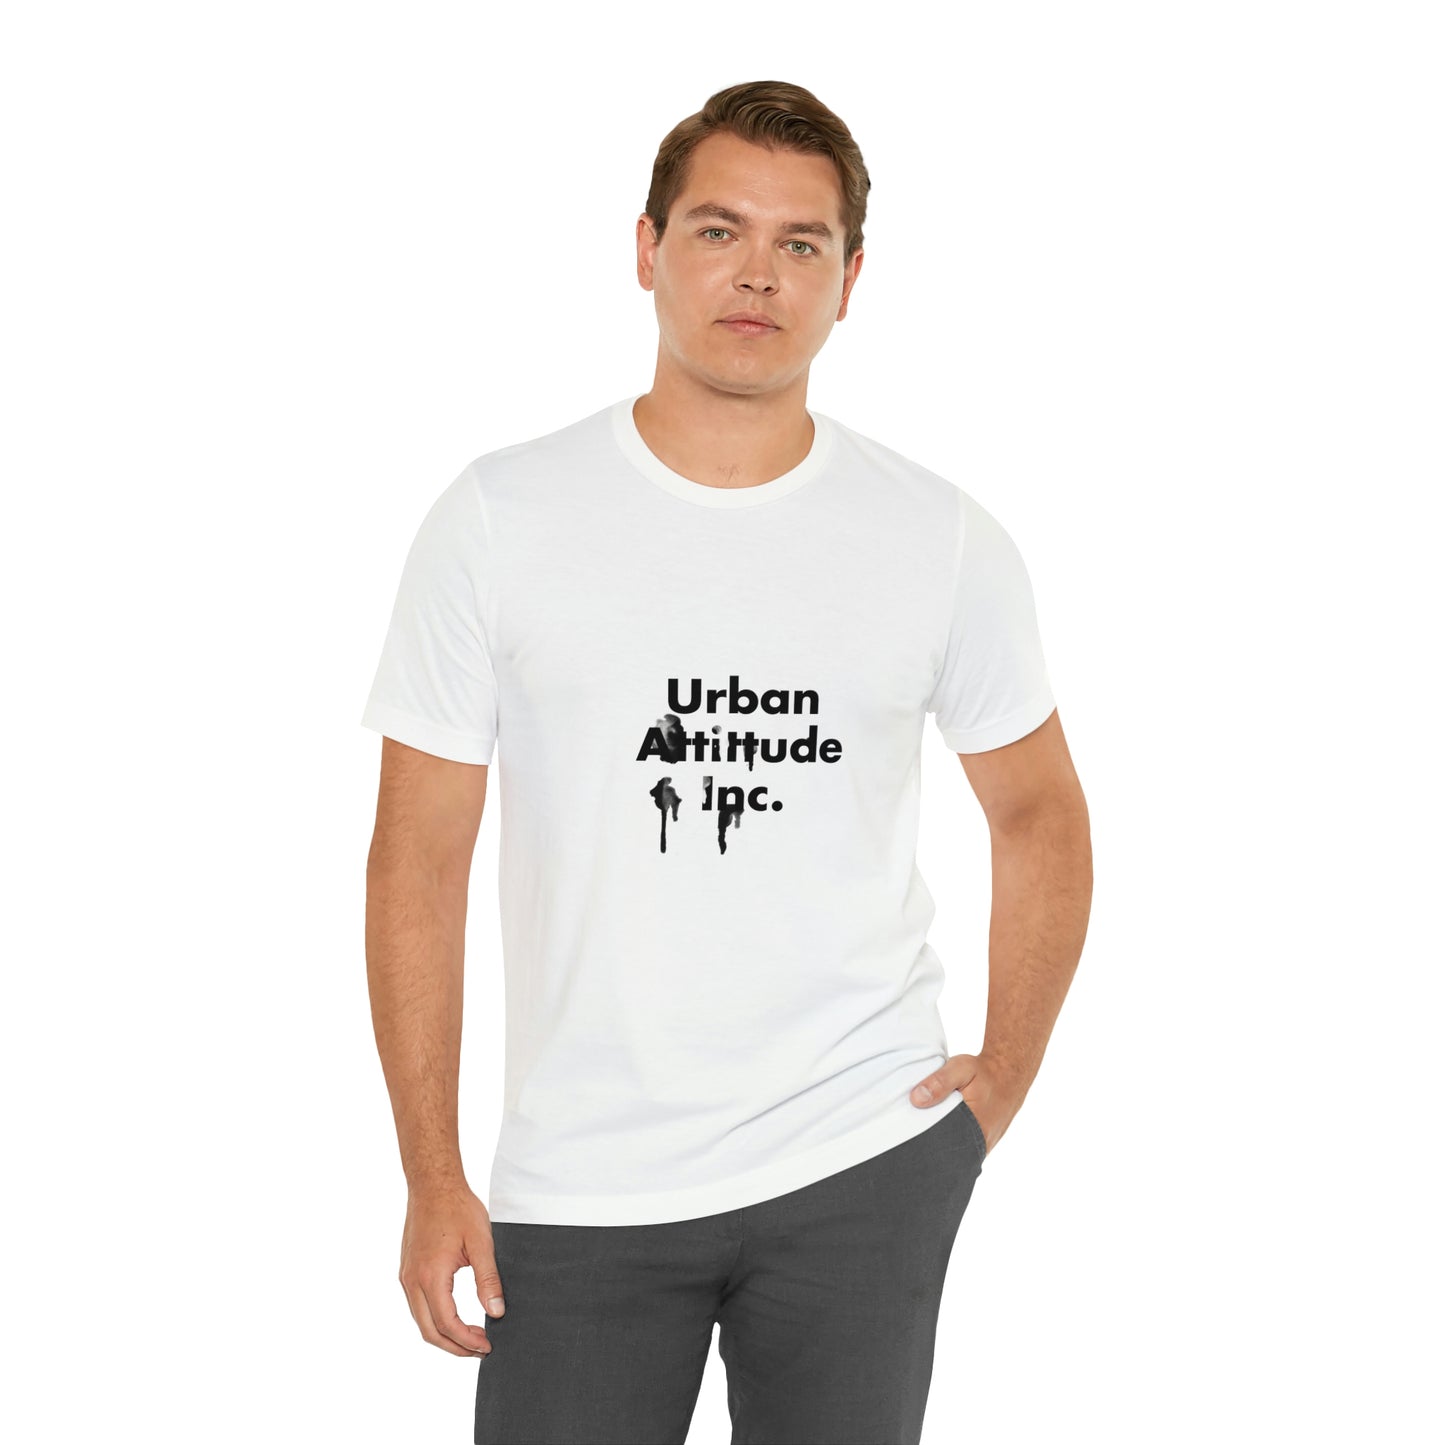 Urban Attitude Inc.